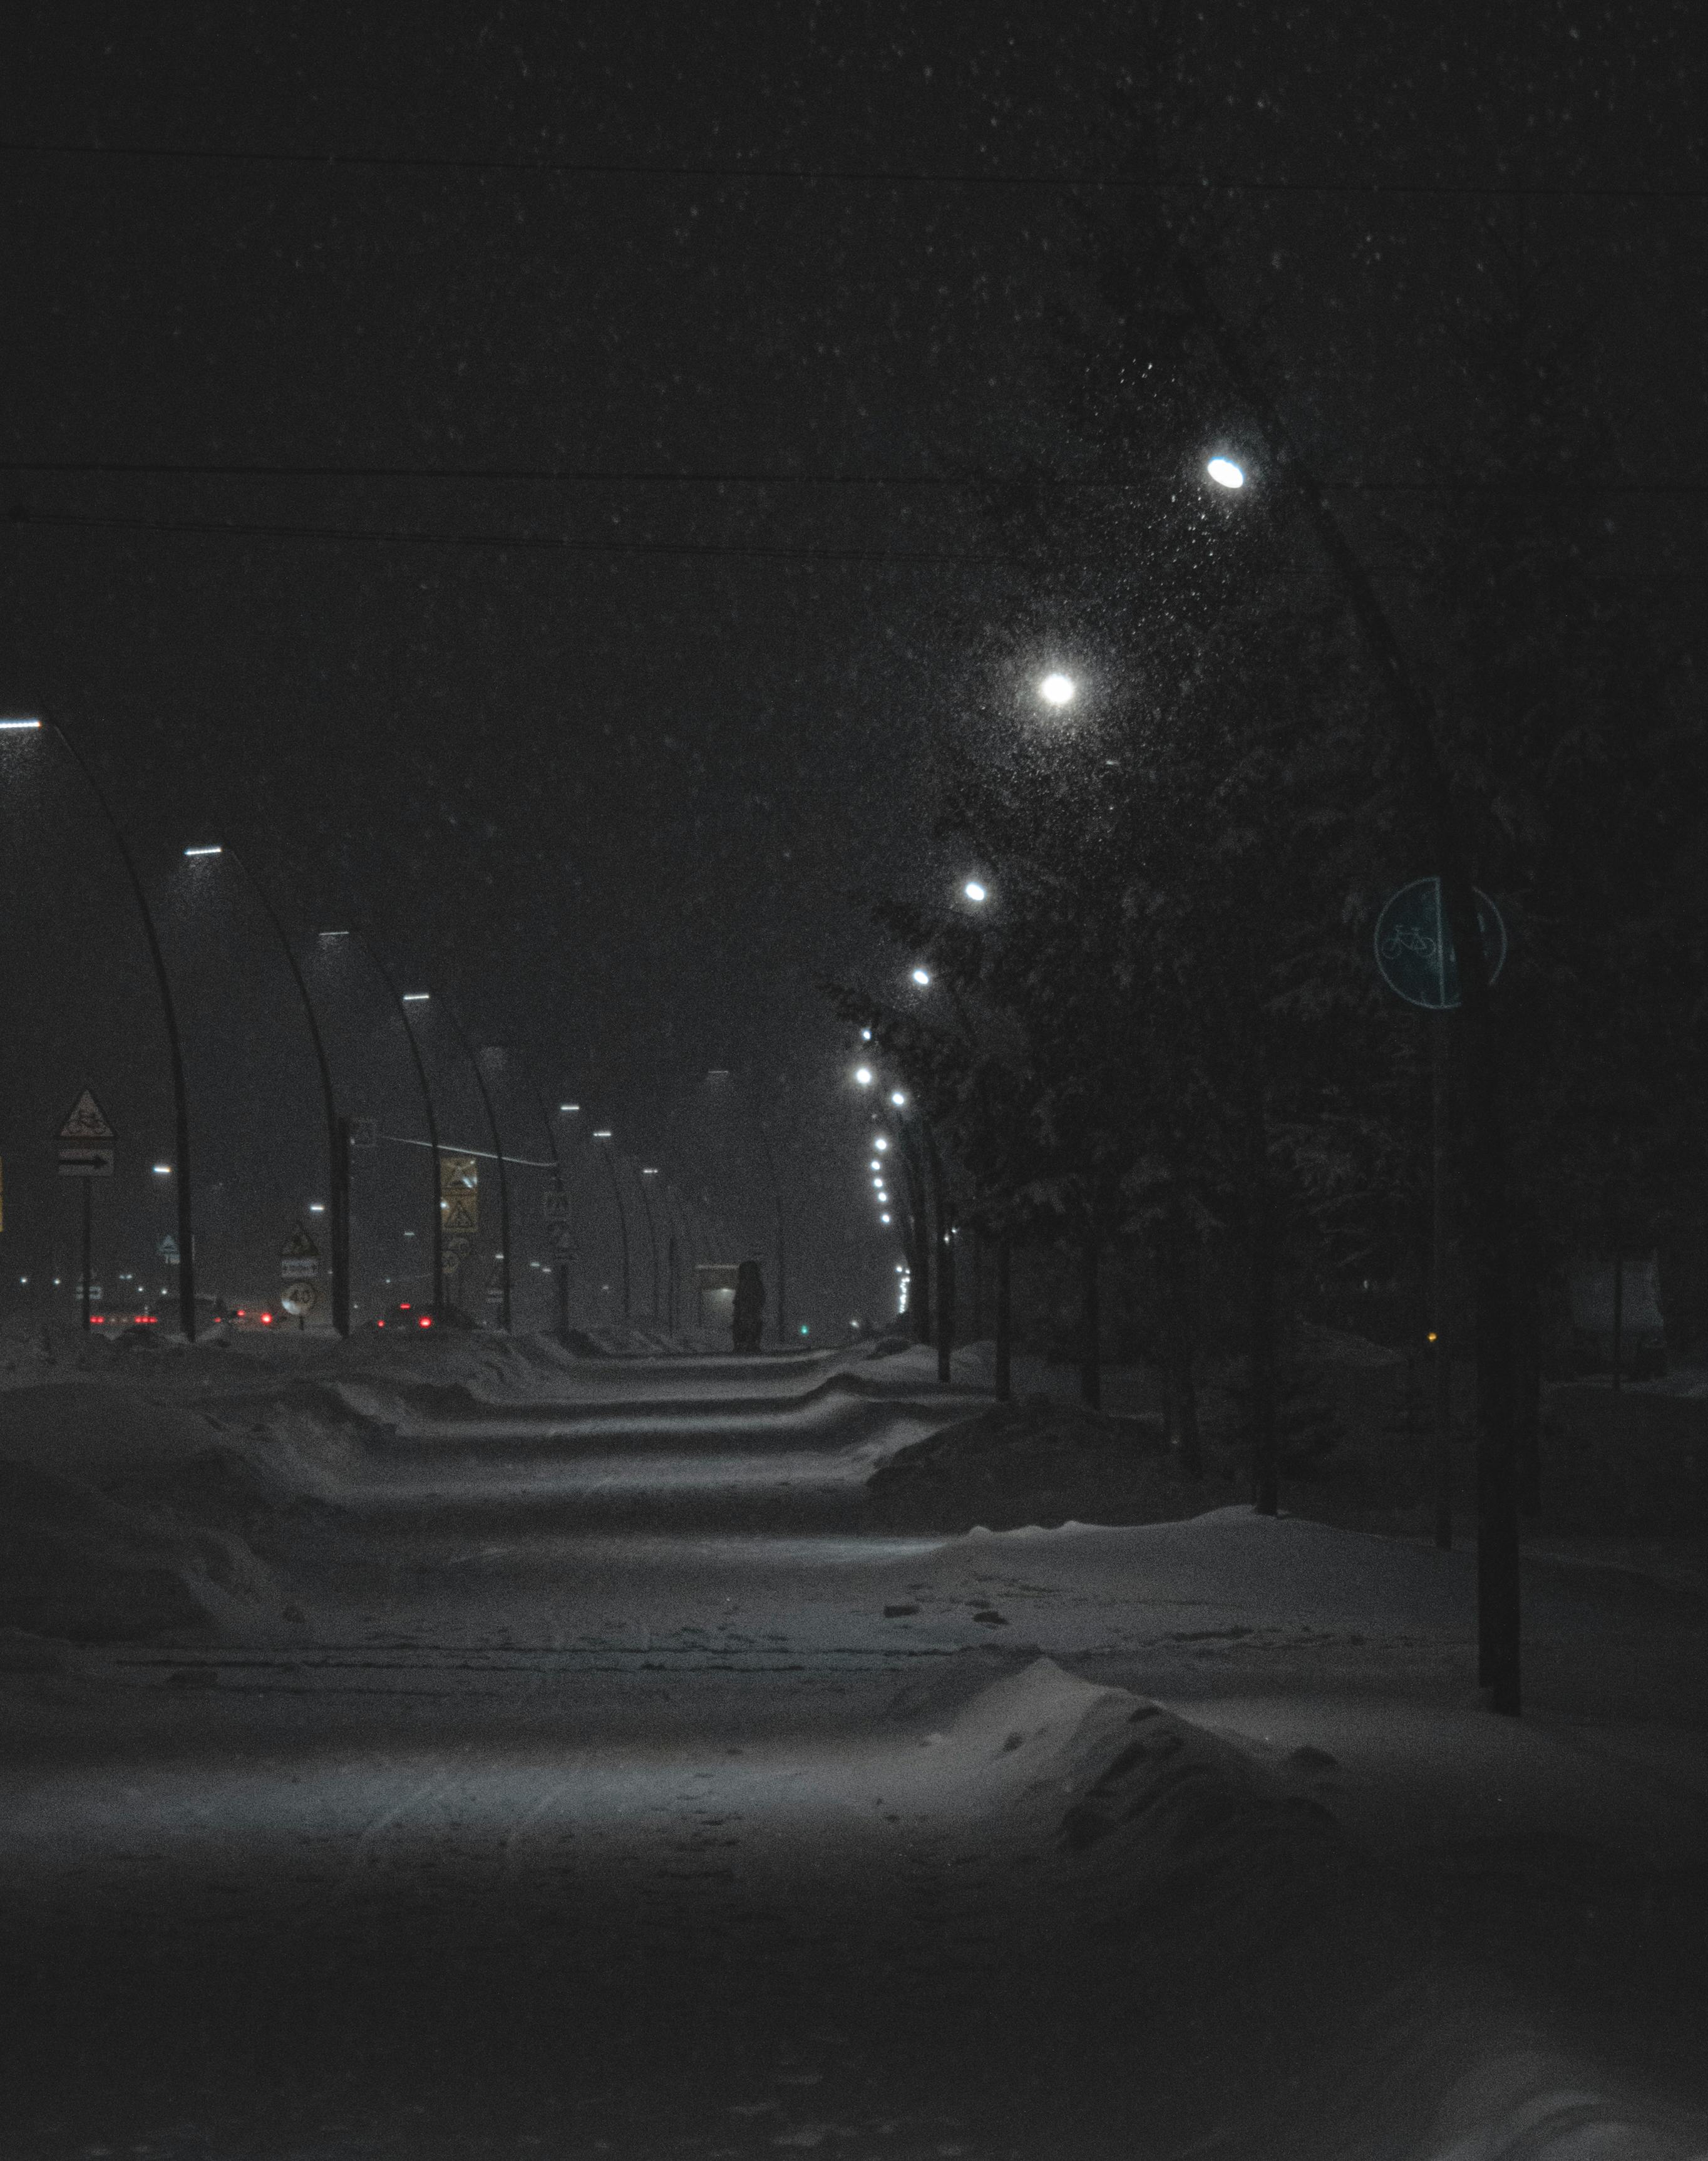 Streetlights by night · Free Stock Photo